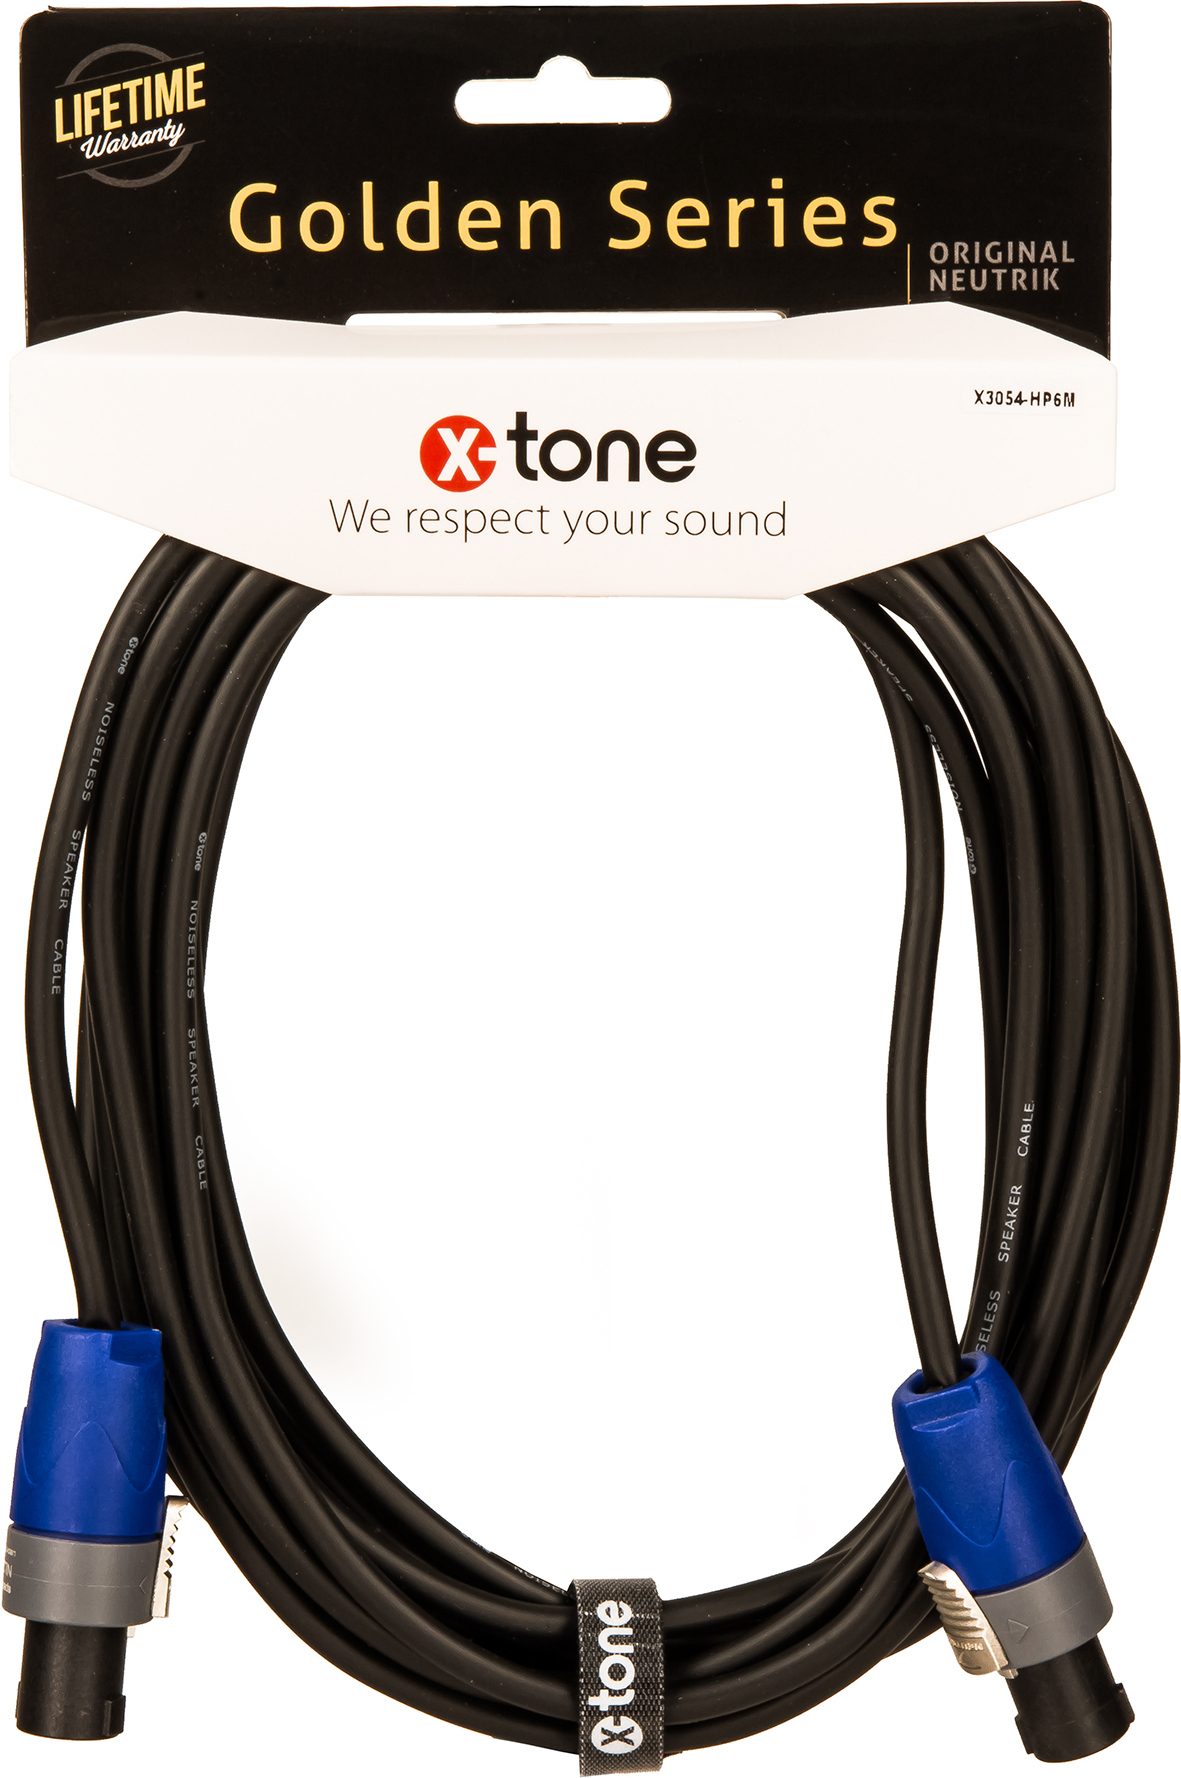 X-tone X3054-hp6m Speaker Cable Golden Series Neutrik Speakon 6m - Kabel - Main picture